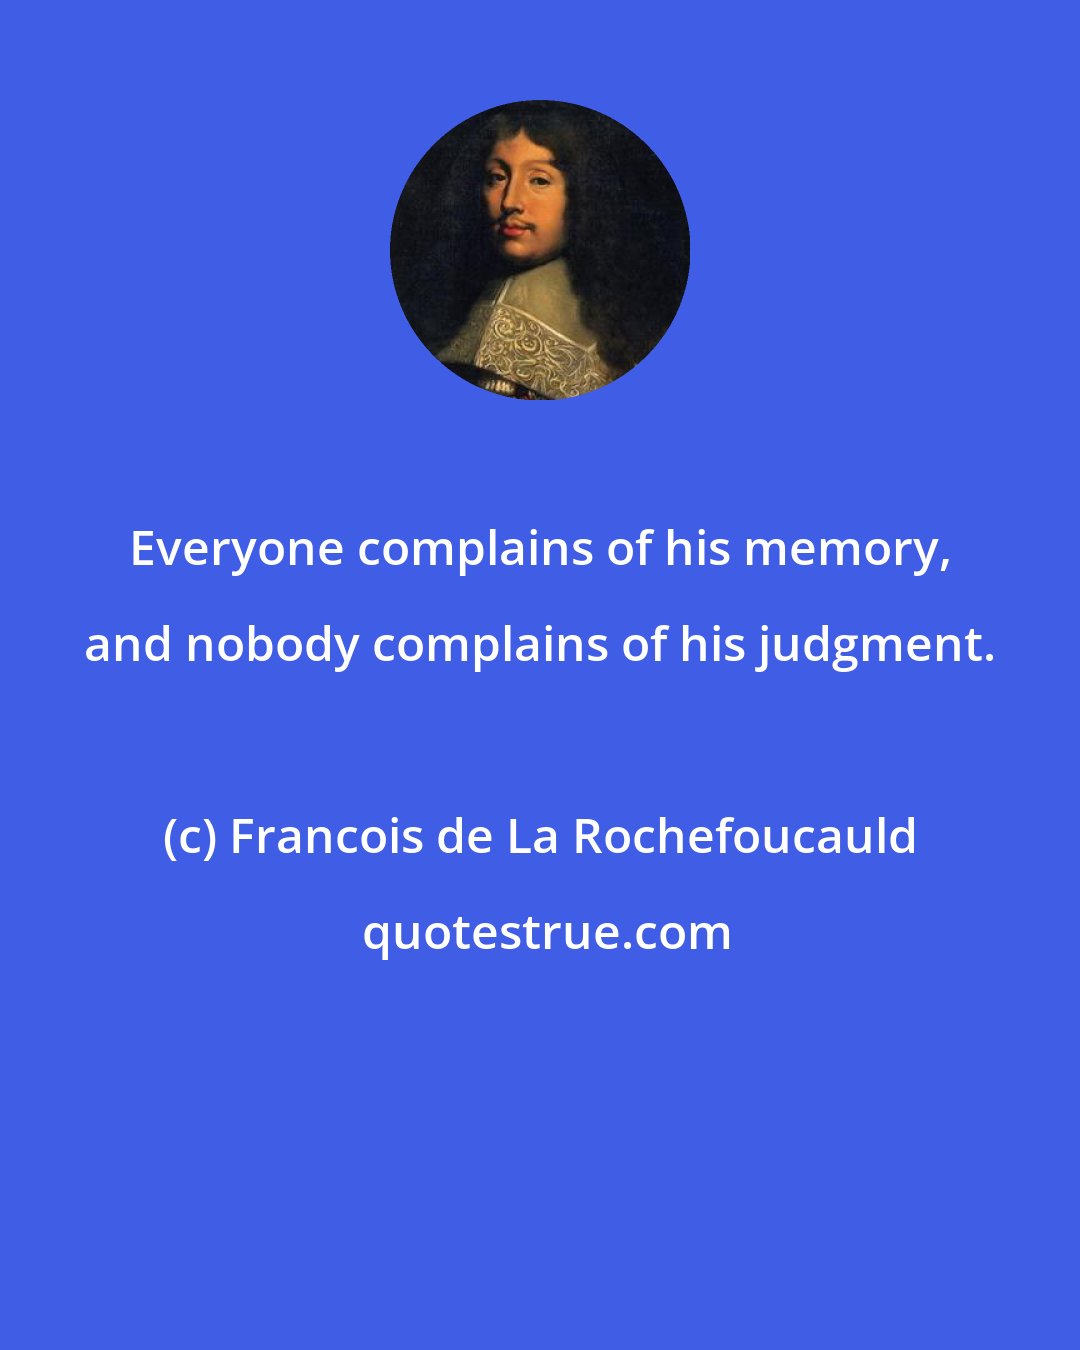 Francois de La Rochefoucauld: Everyone complains of his memory, and nobody complains of his judgment.